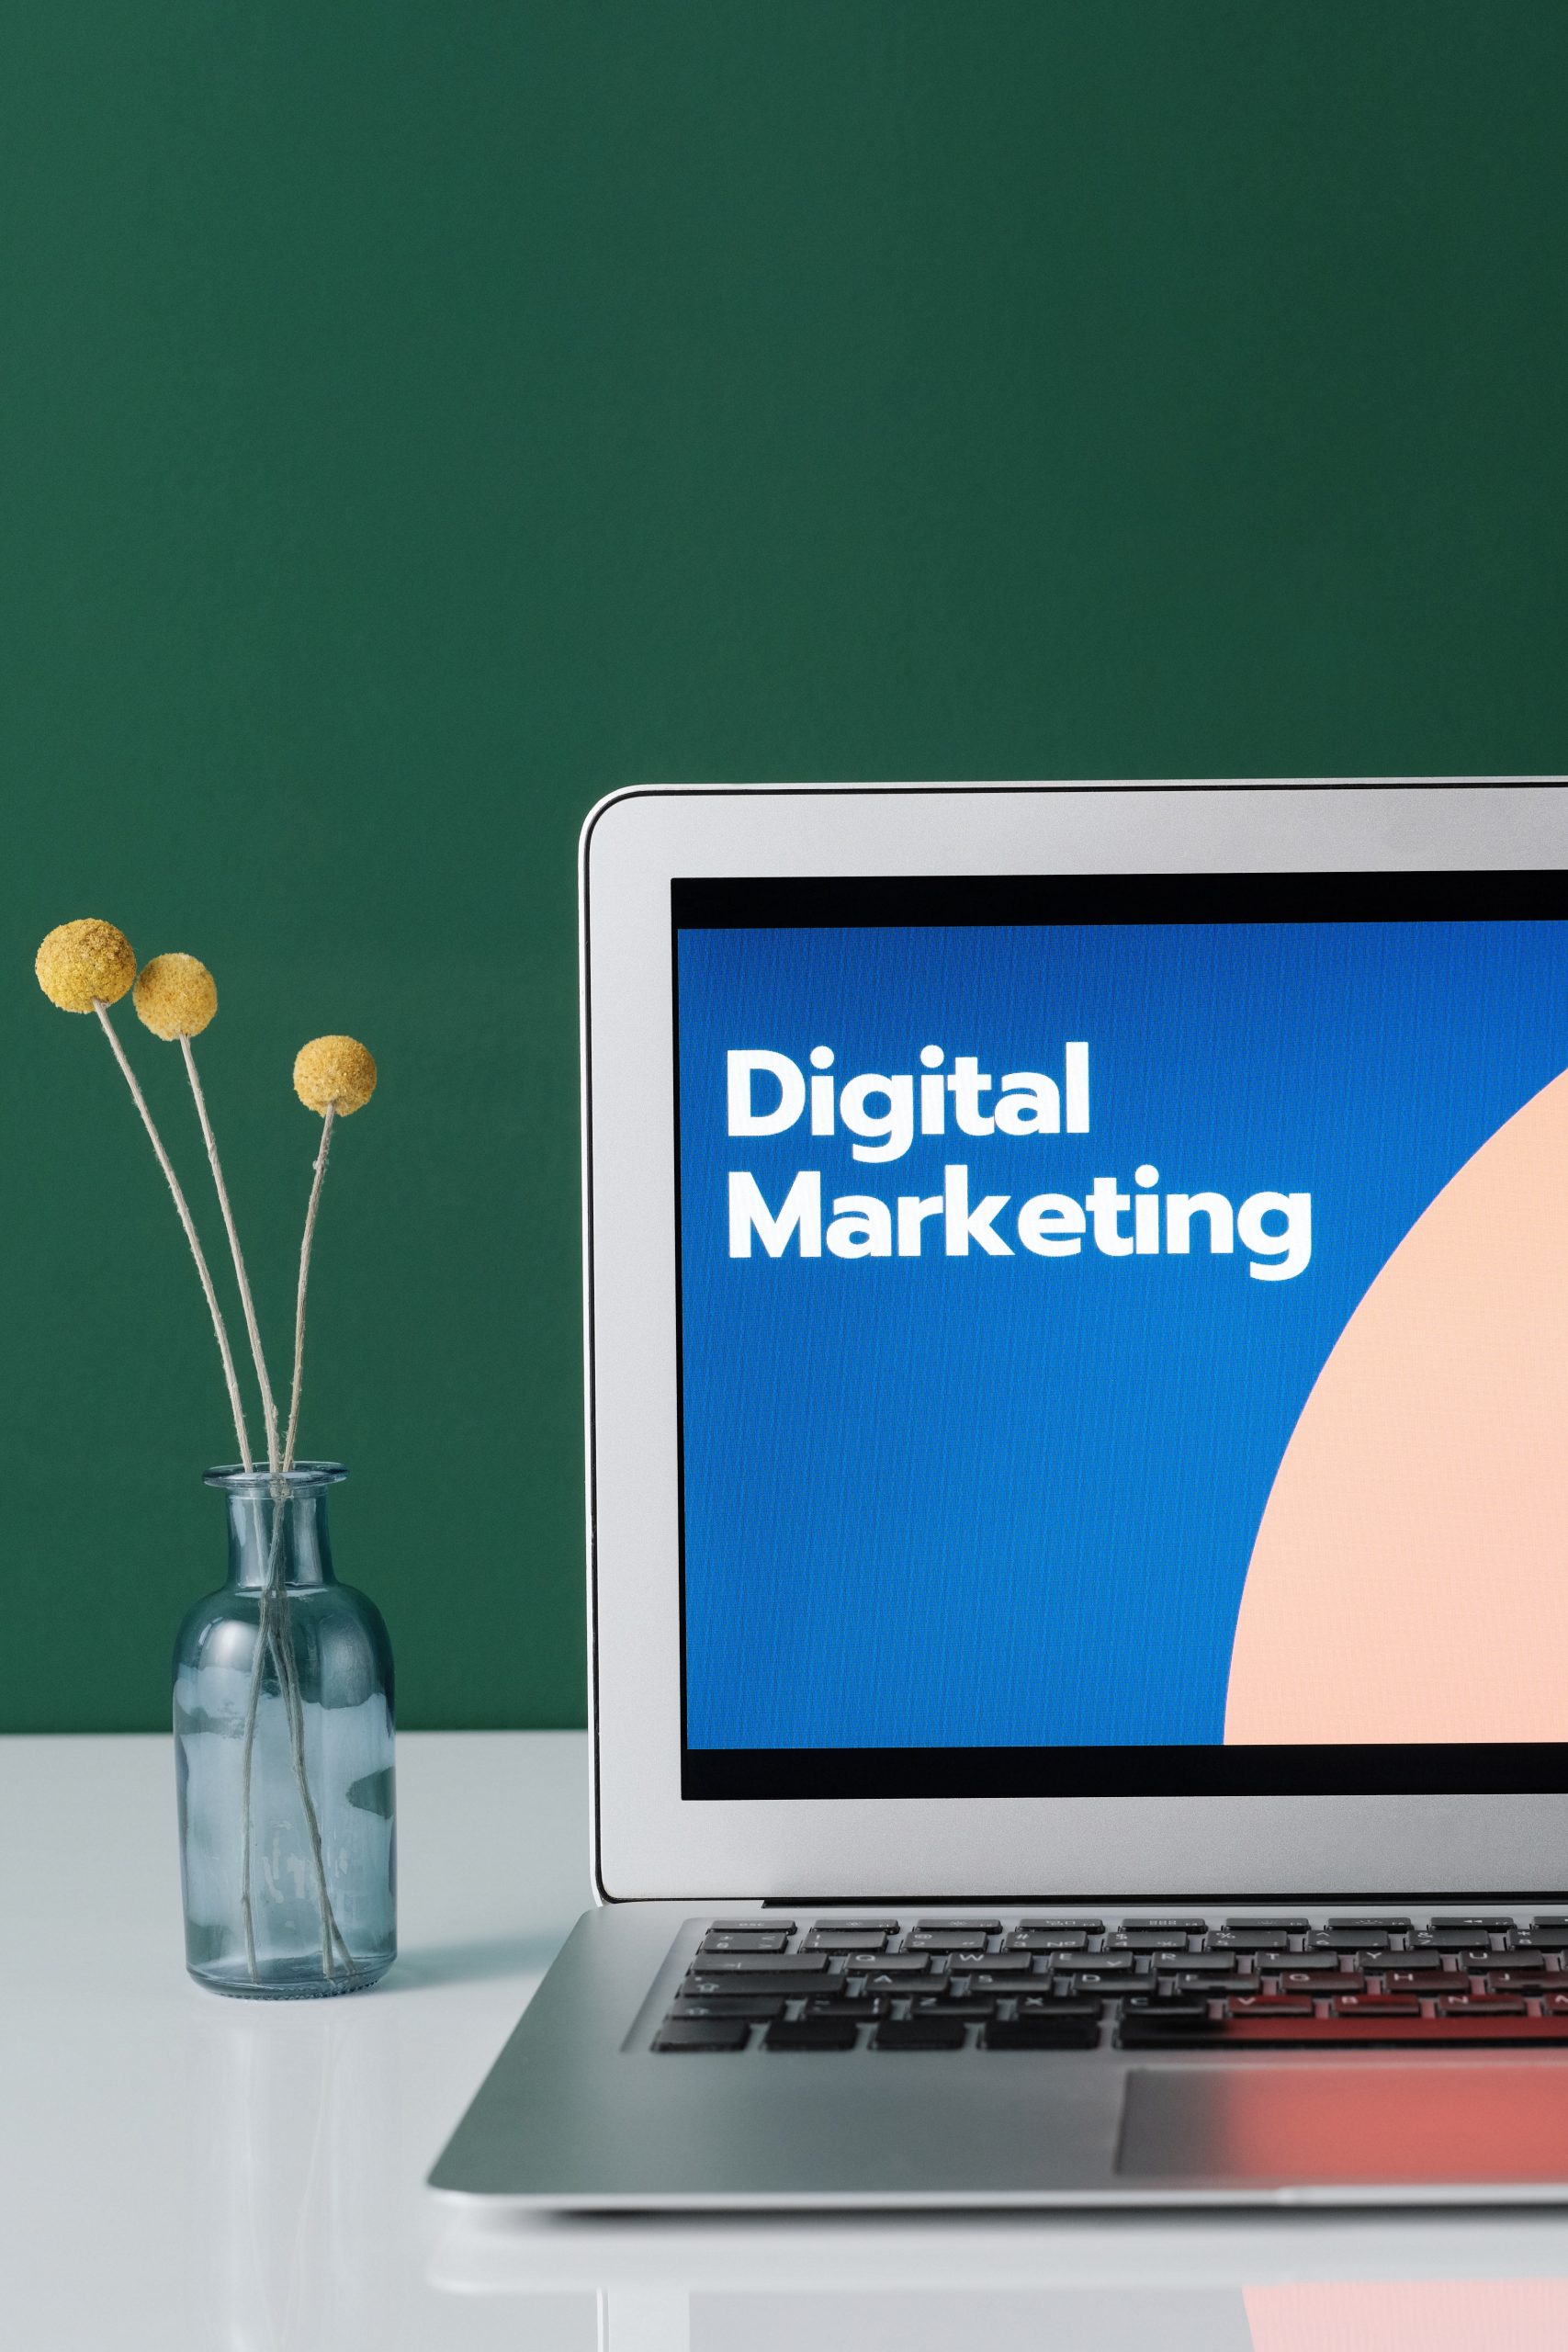 Bespoke Digital Marketing Services